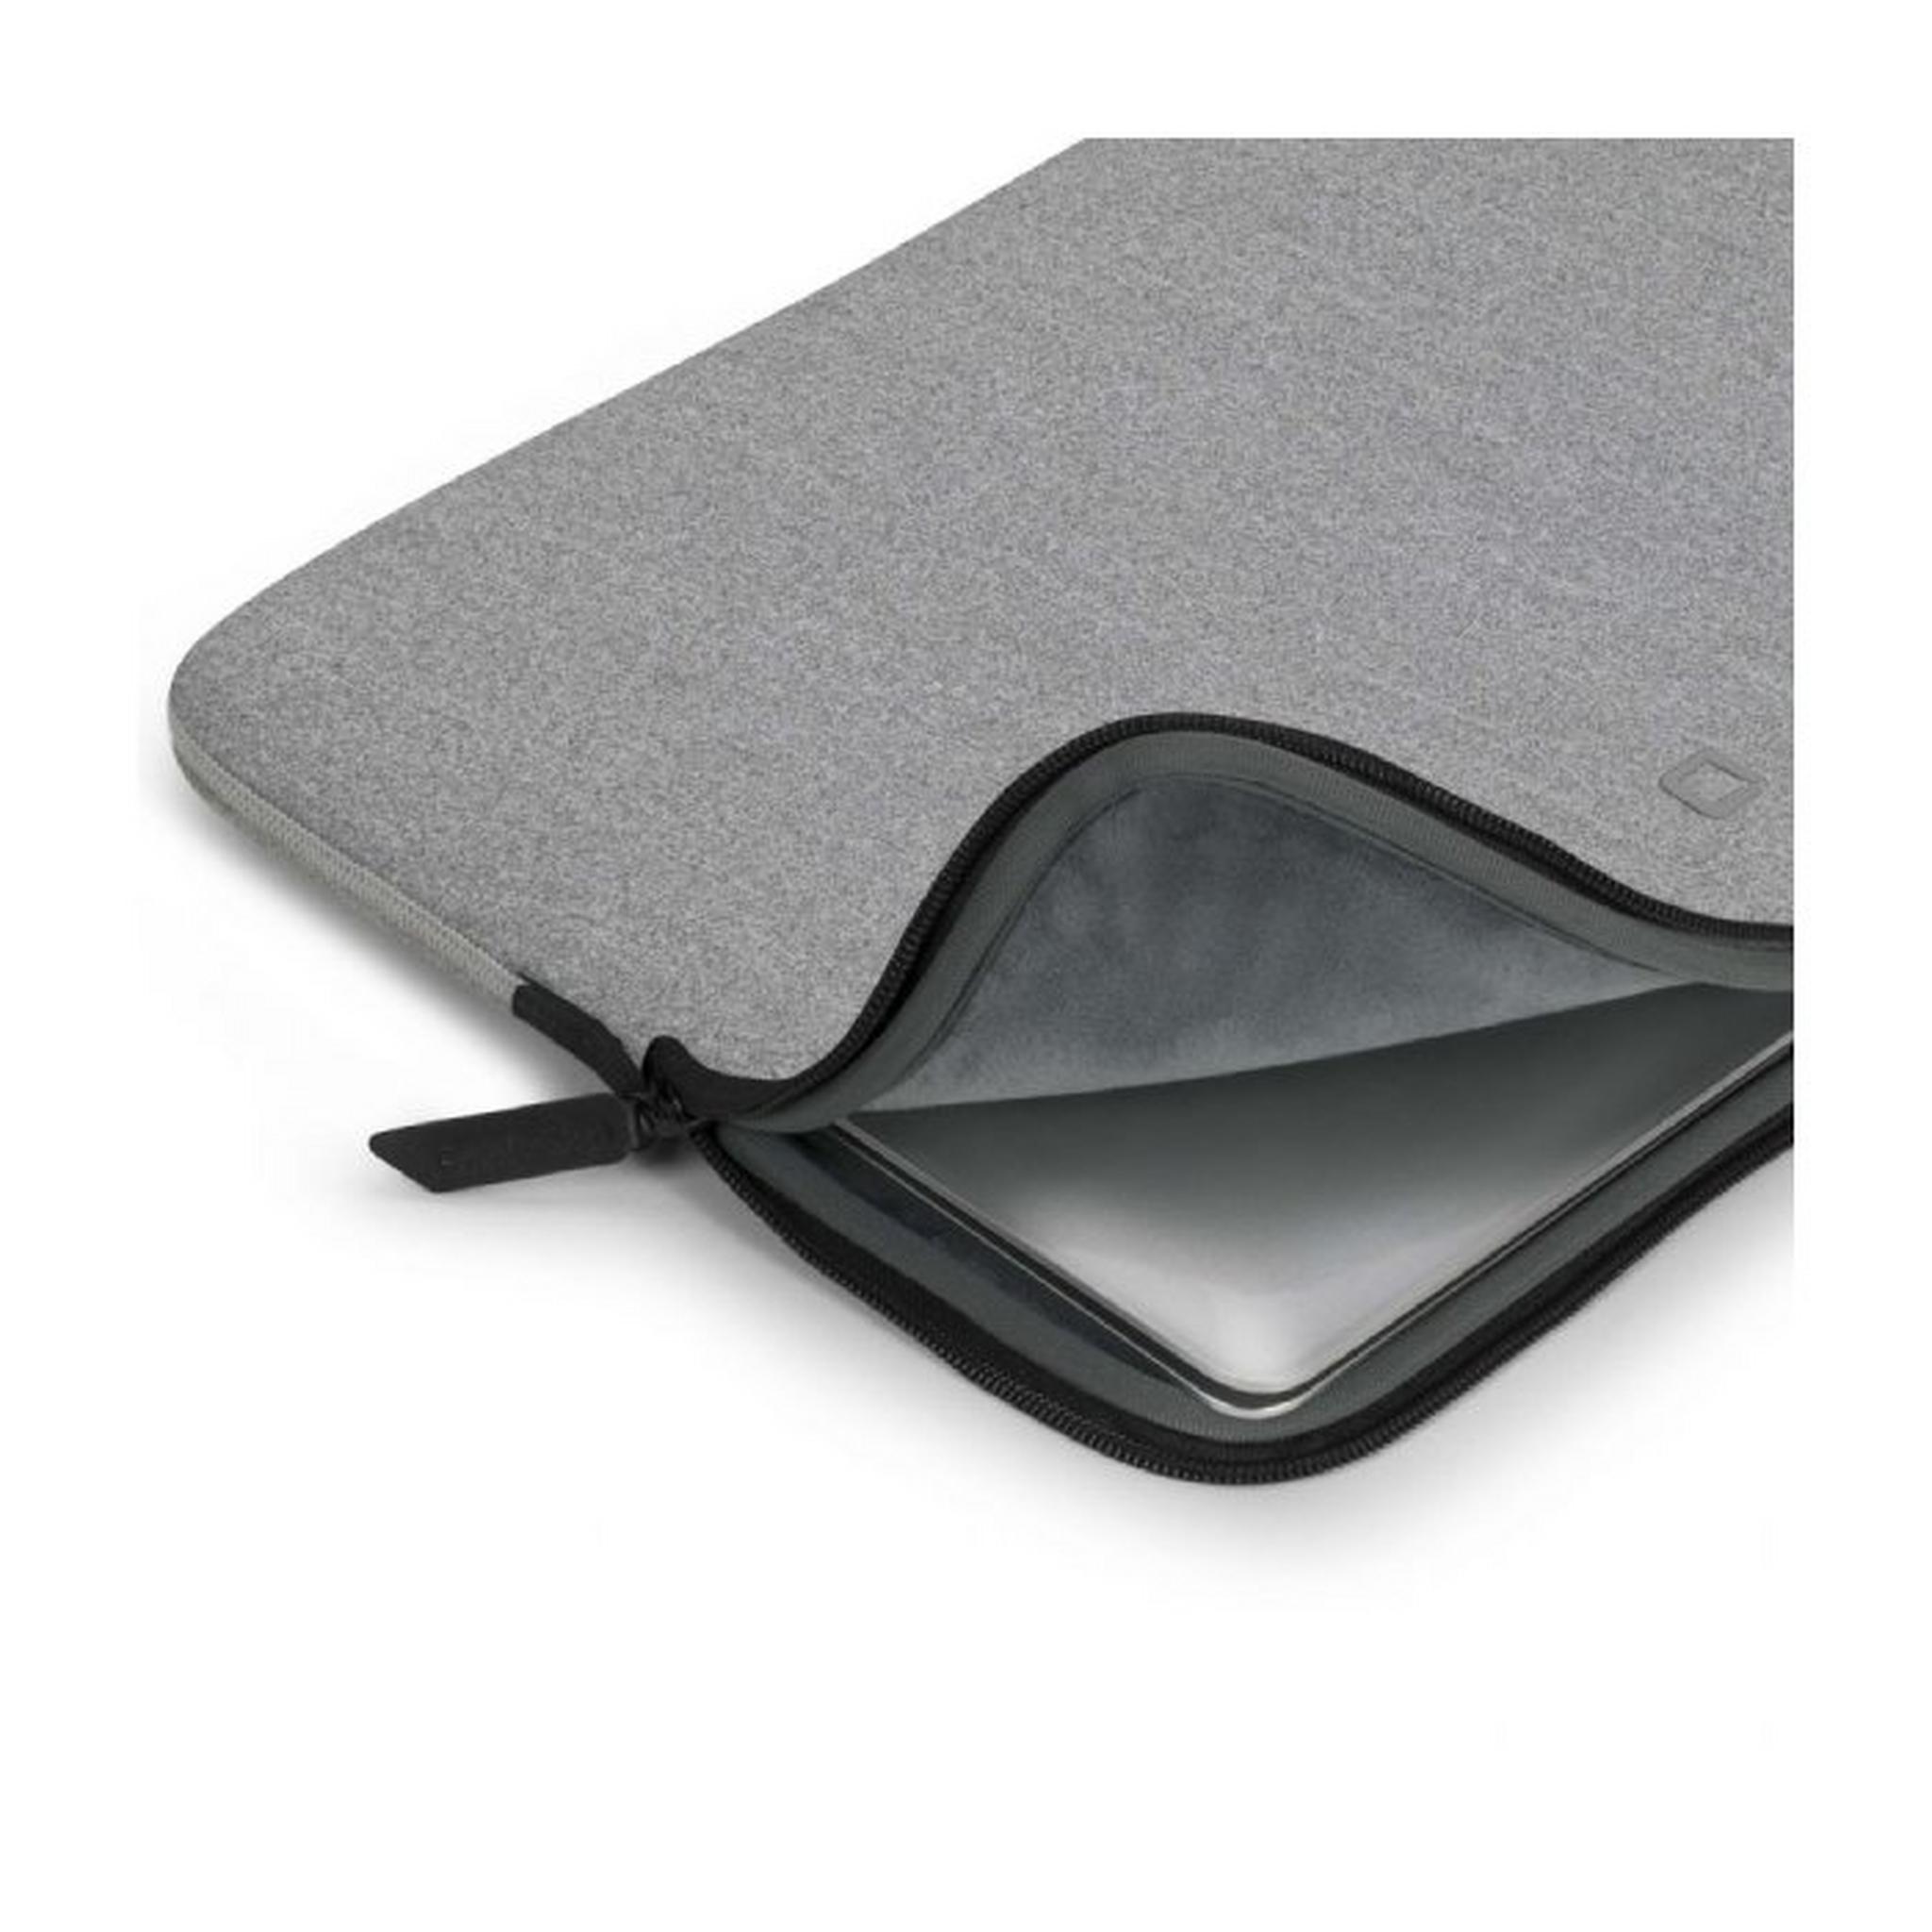 Dicota Skin Urban Sleeve For 13" Laptop - Grey